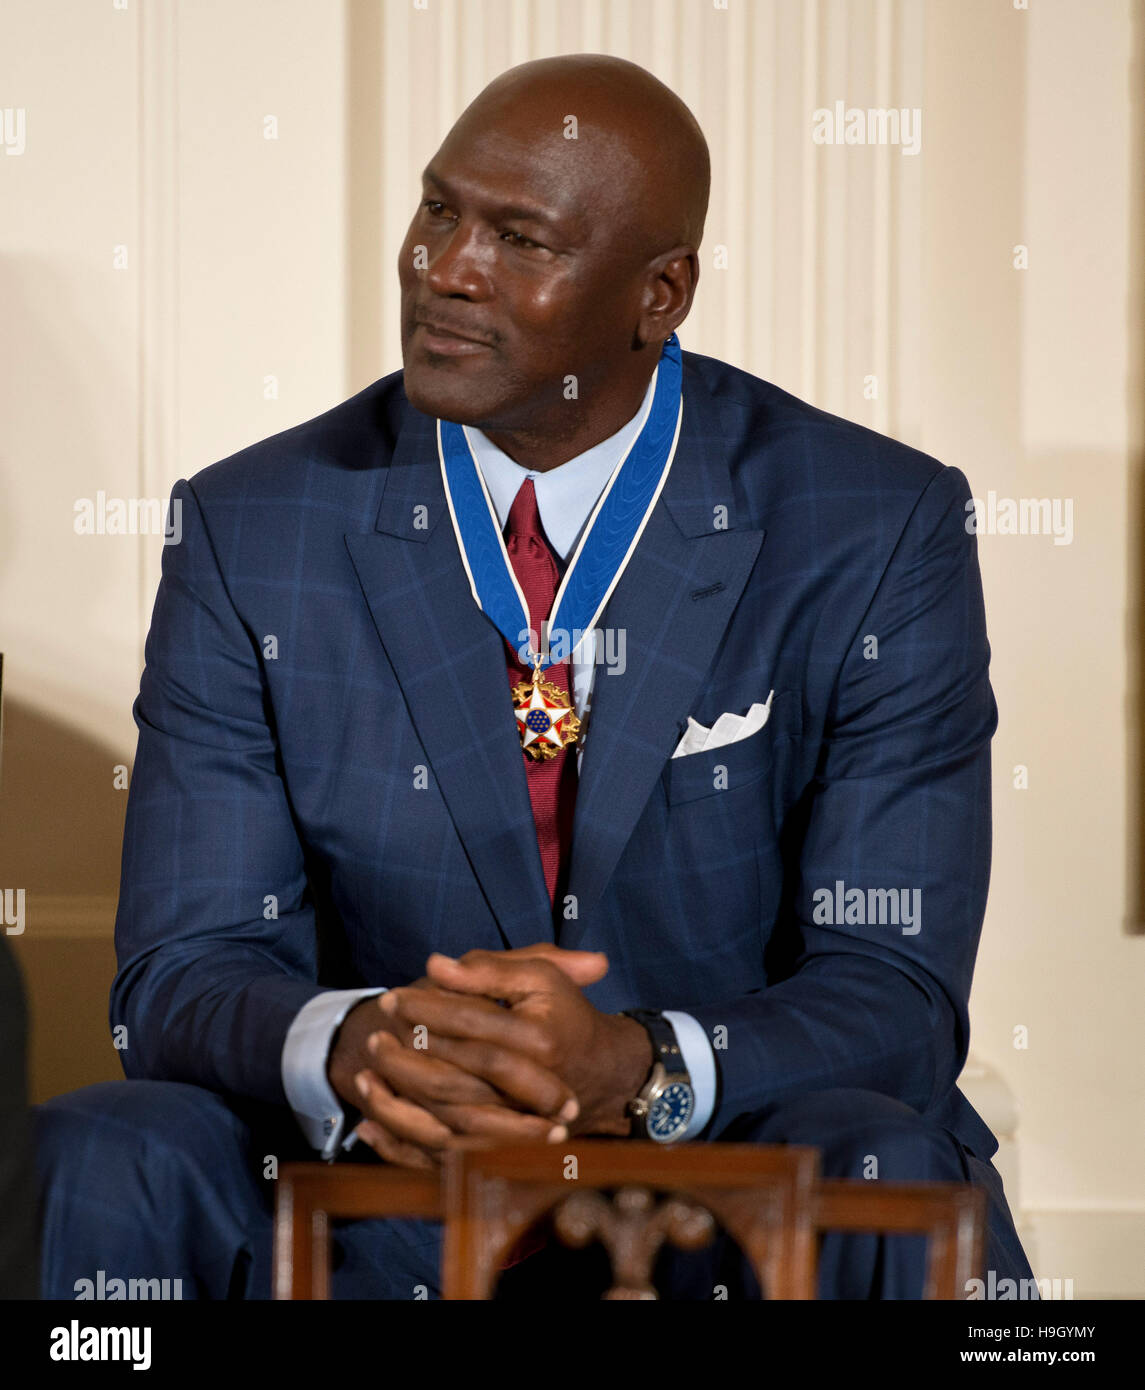 Washington DC, USA. 22nd November, 2016. President Barack Obama awards the Medal of Freedom to Michael Jordan at the White House . Credit:  MediaPunch Inc/Alamy Live News Stock Photo